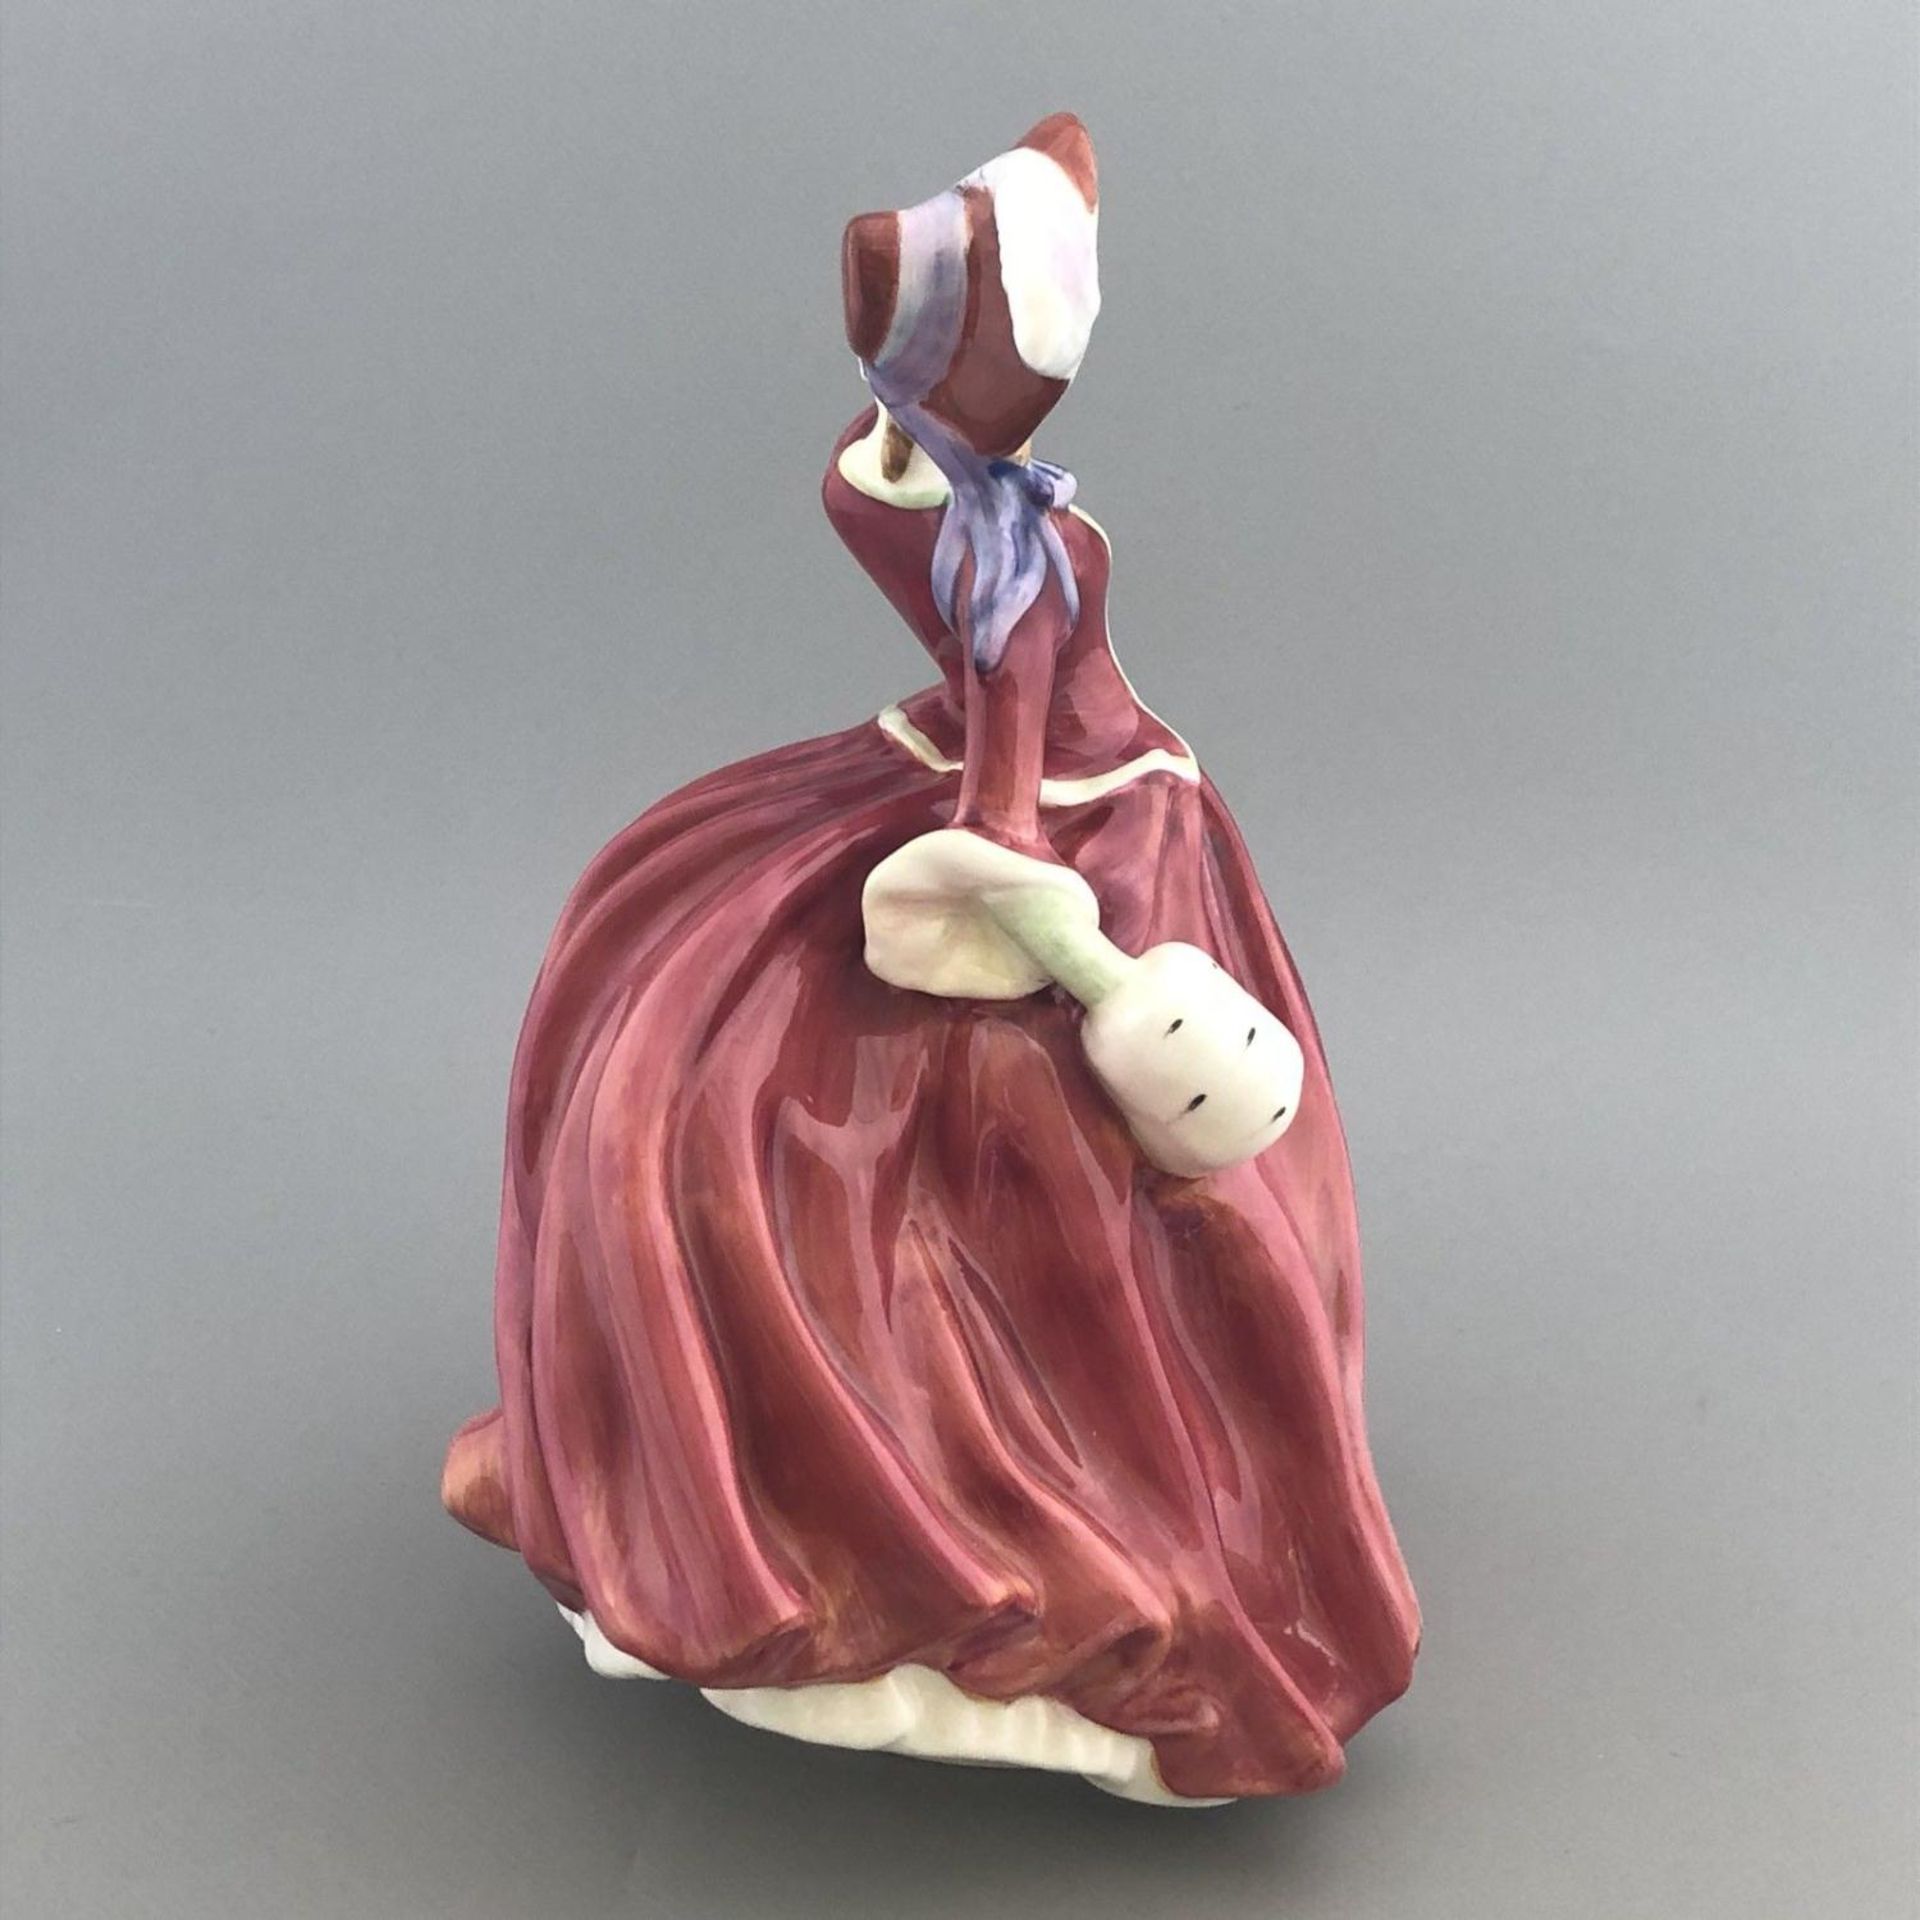 English Porcelain Figurine "Autumn Breezes" - Royal Doulton HN 1934 - Vintage - Image 3 of 5